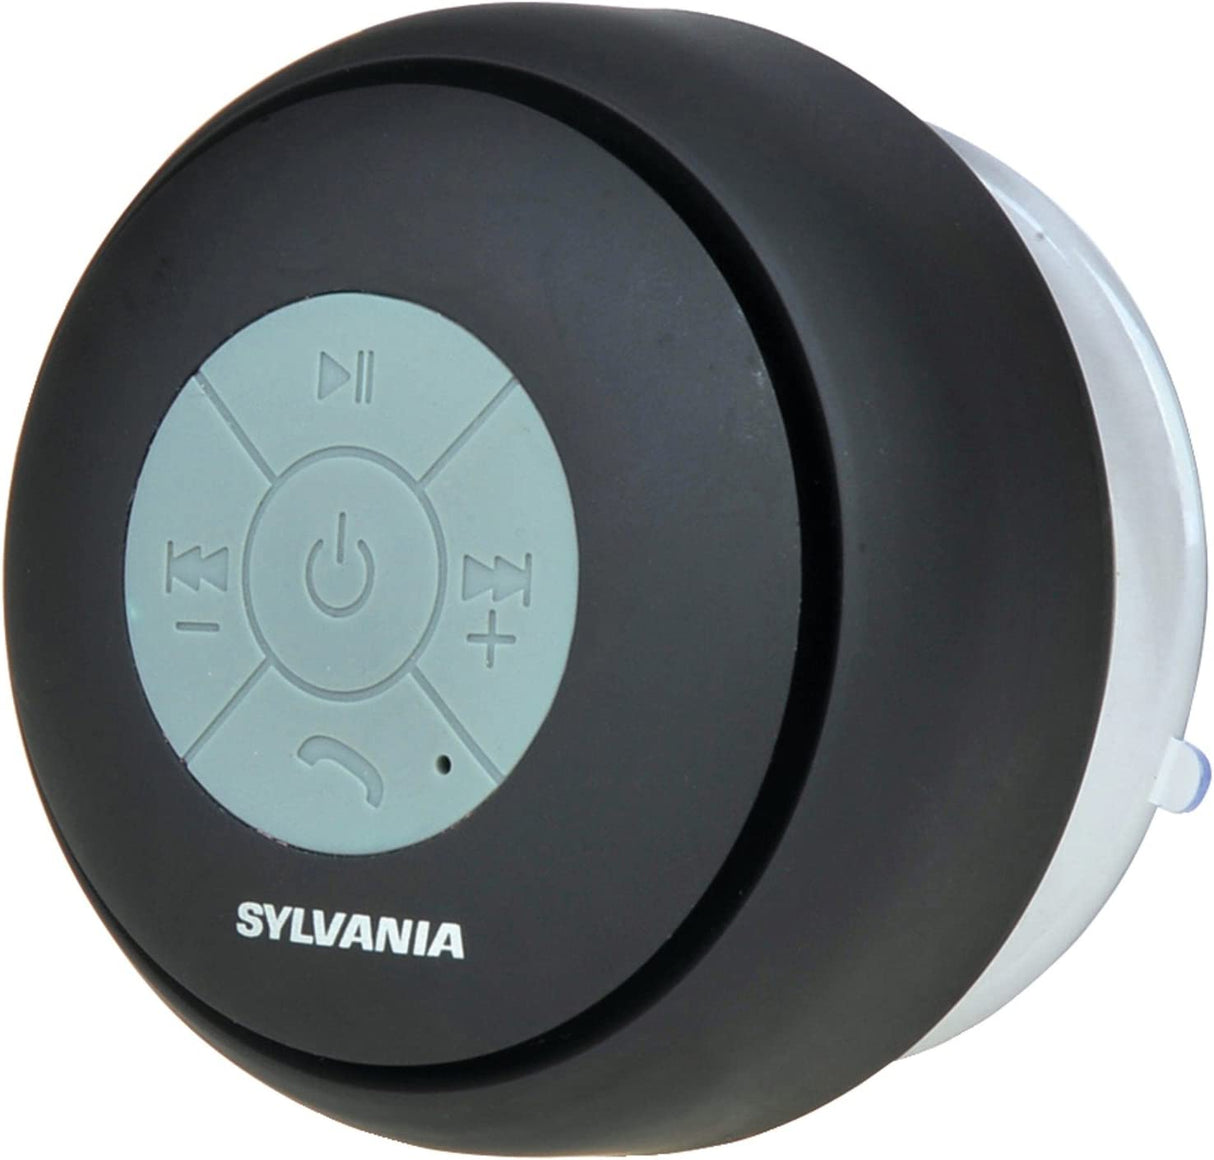 Sylvania SP230-Black Bluetooth Shower Speaker (Black)